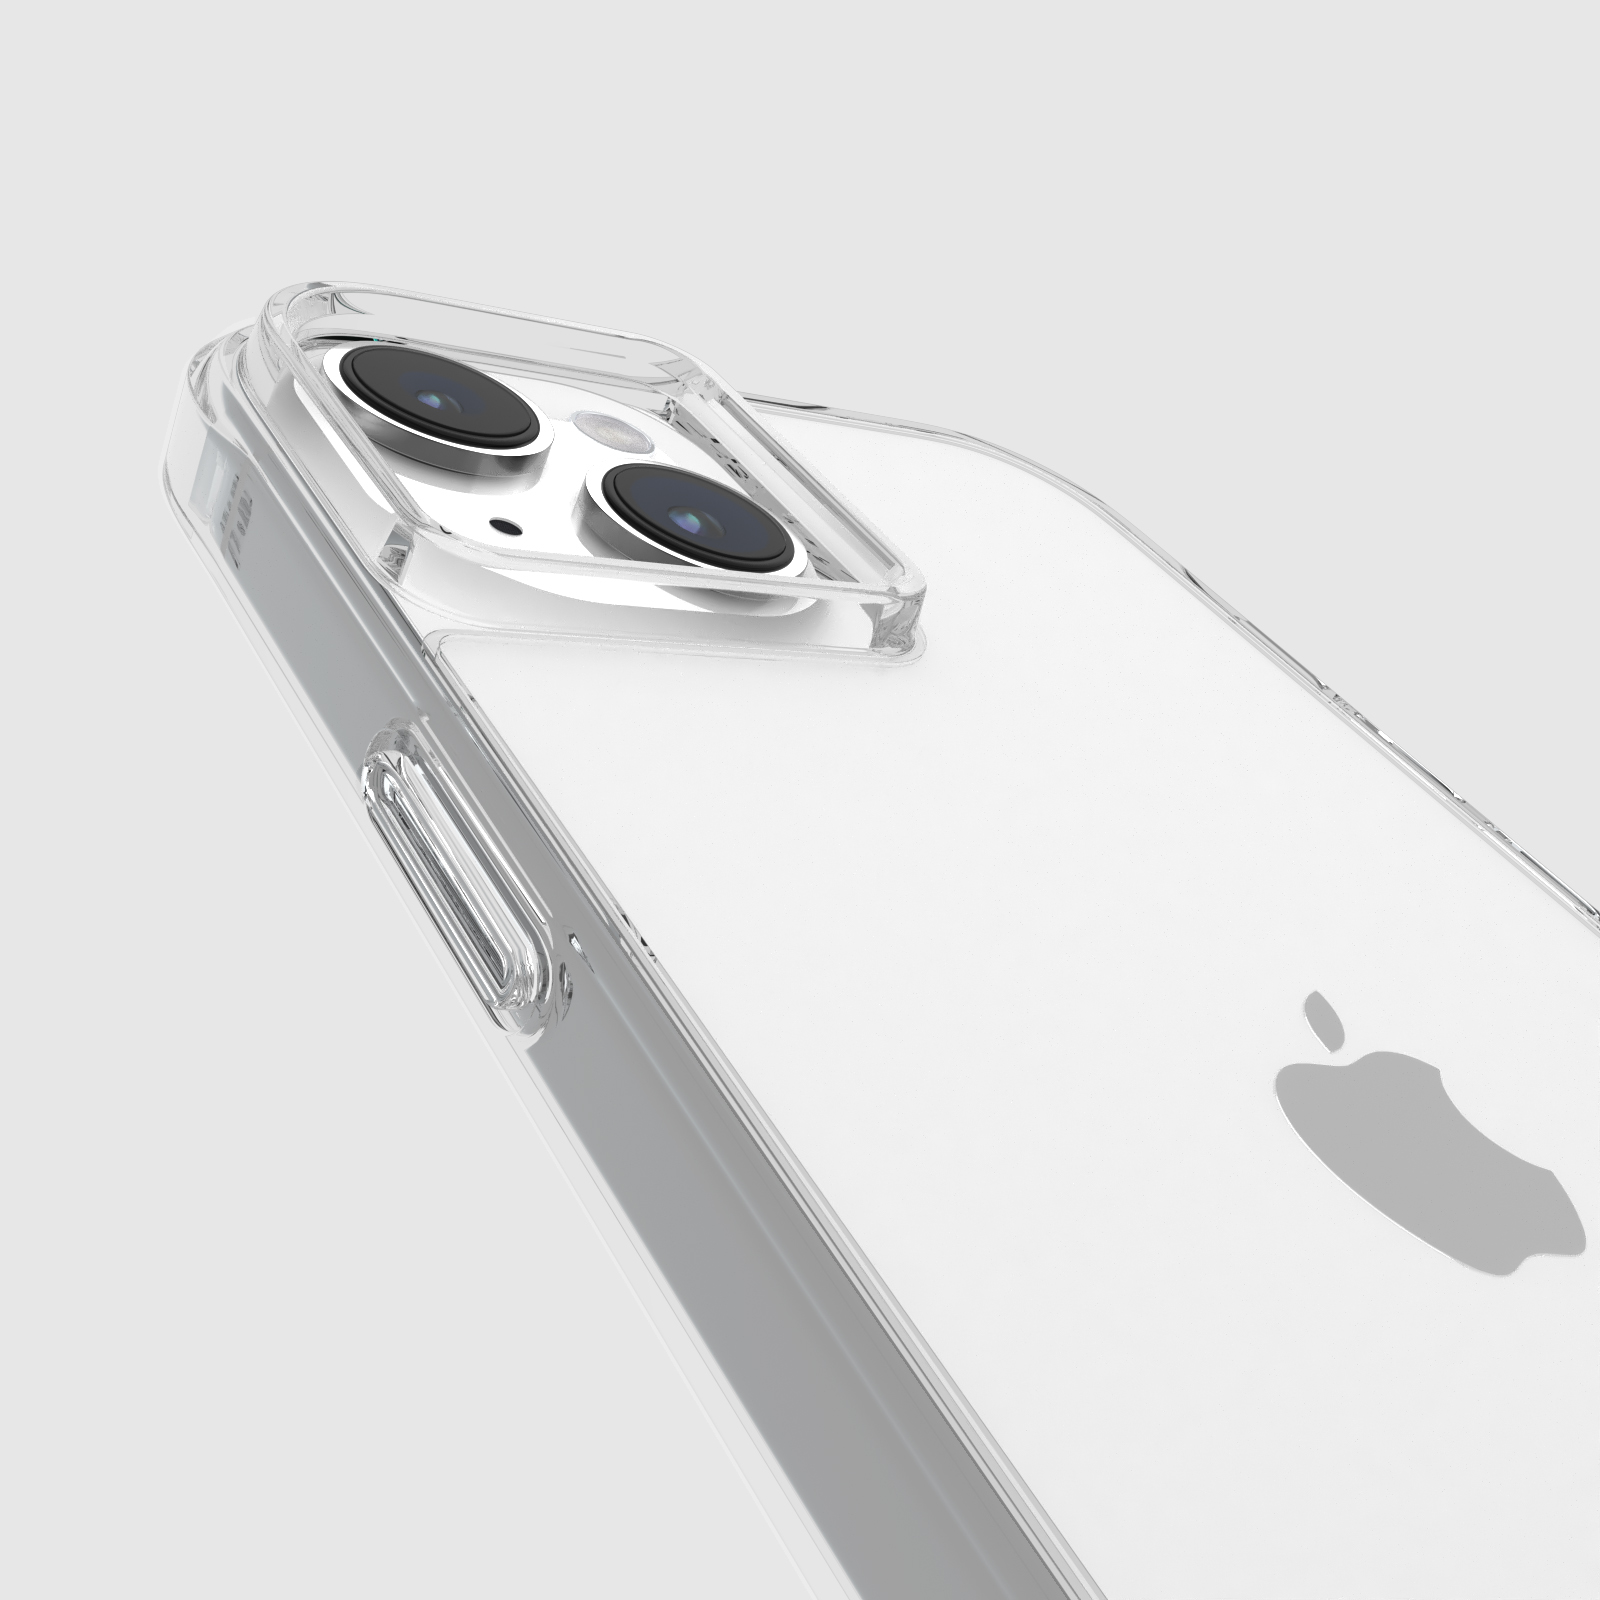 CASE-MATE Tough Clear, Backcover, 15 iPhone Apple, Plus, Transparent